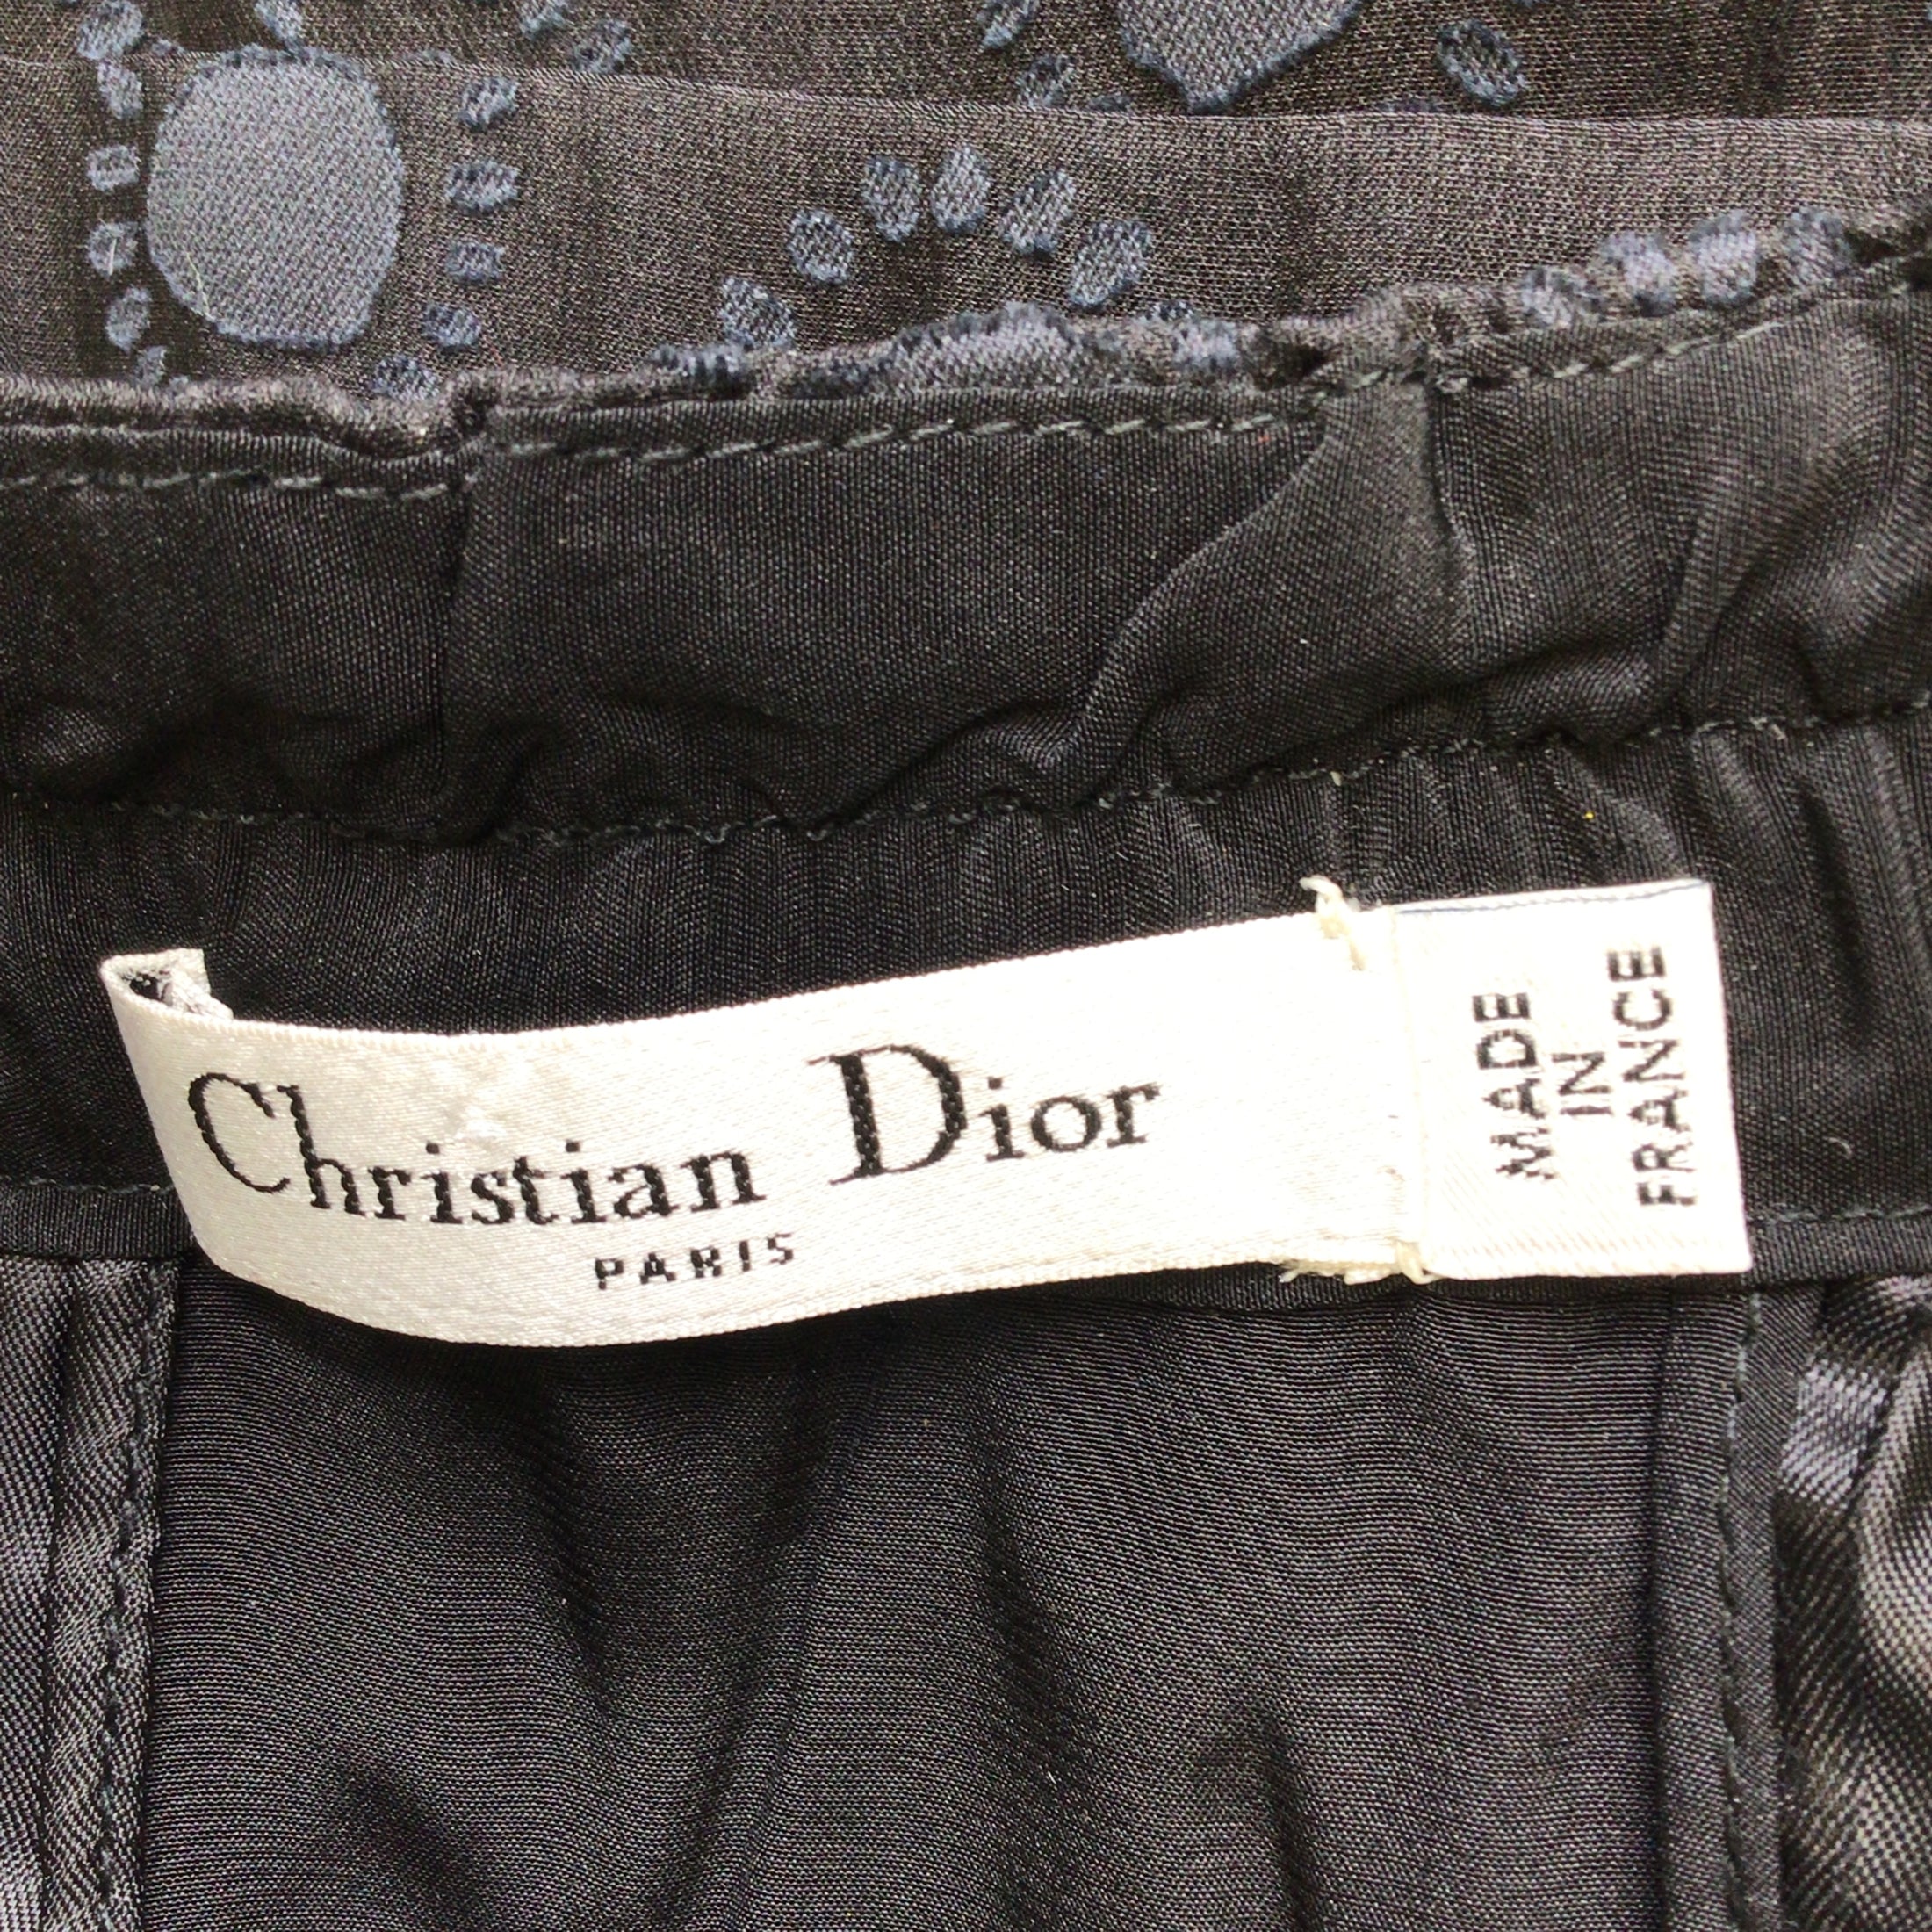 Christian Dior Black Circle Print Cotton and Silk Skirt